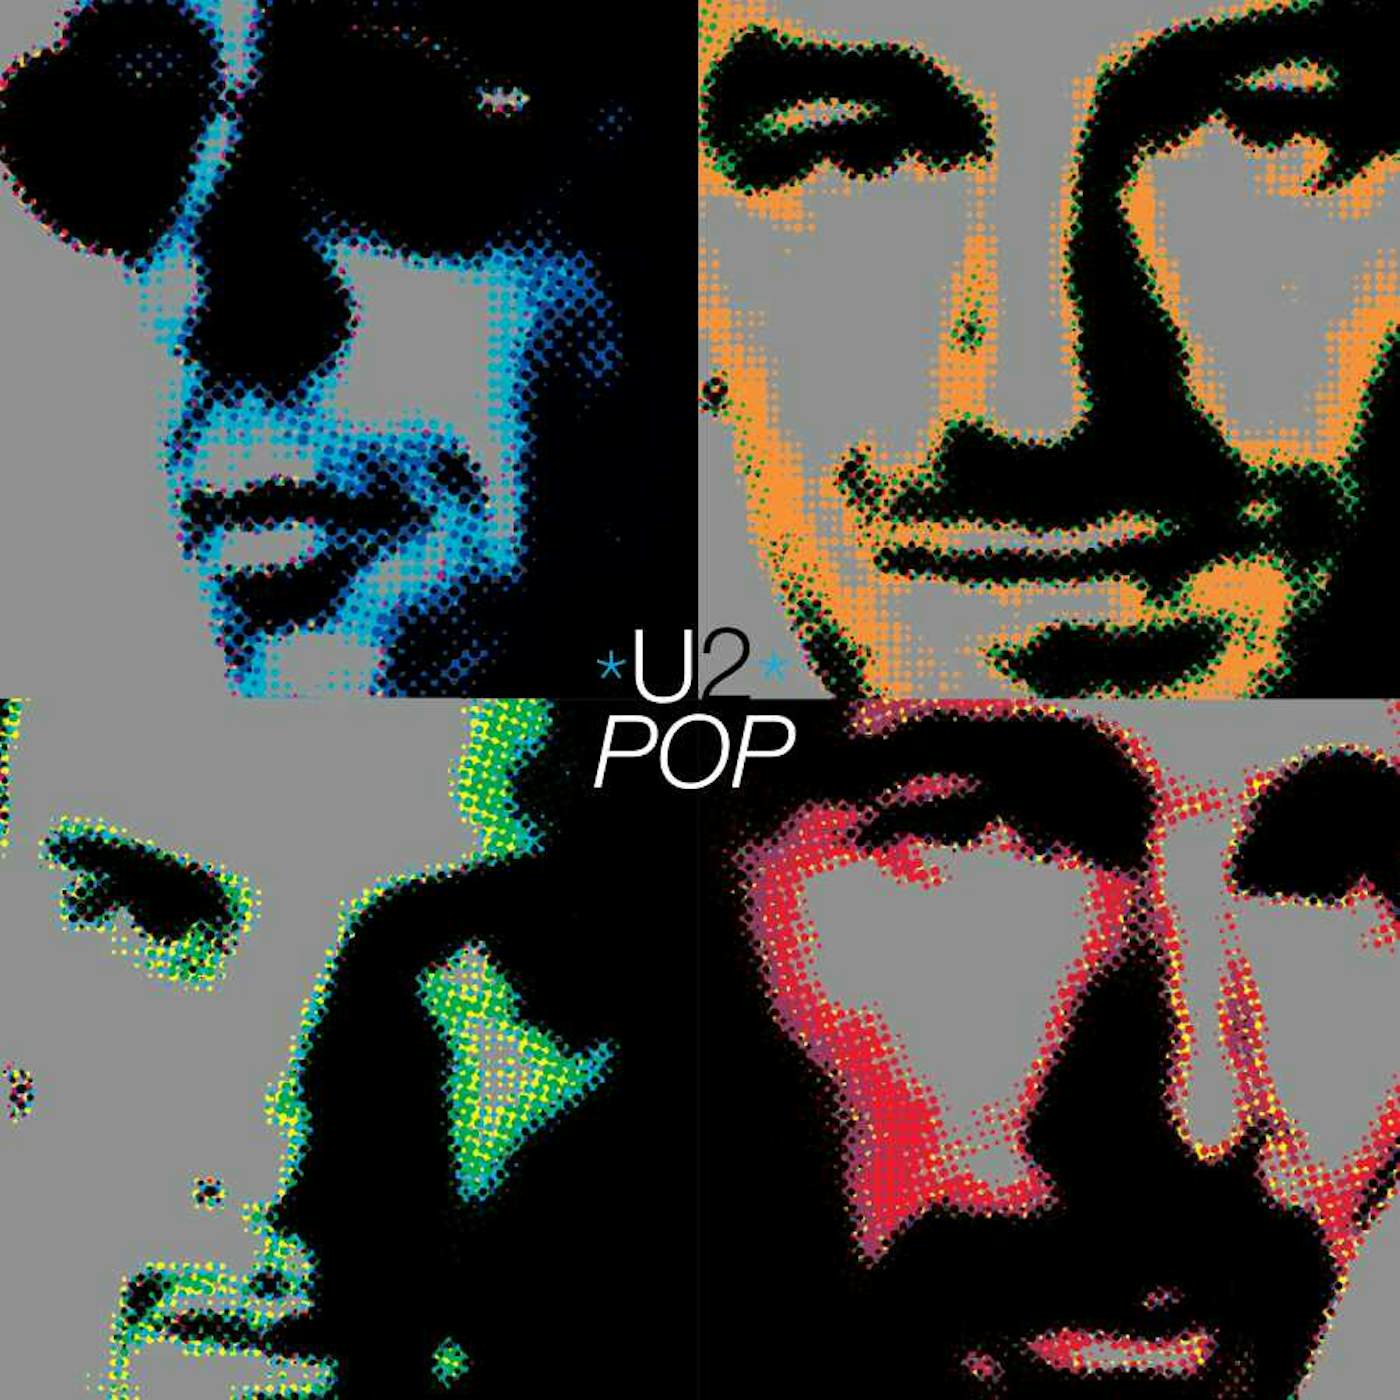 U2 POP (2017 REMASTER) Vinyl Record